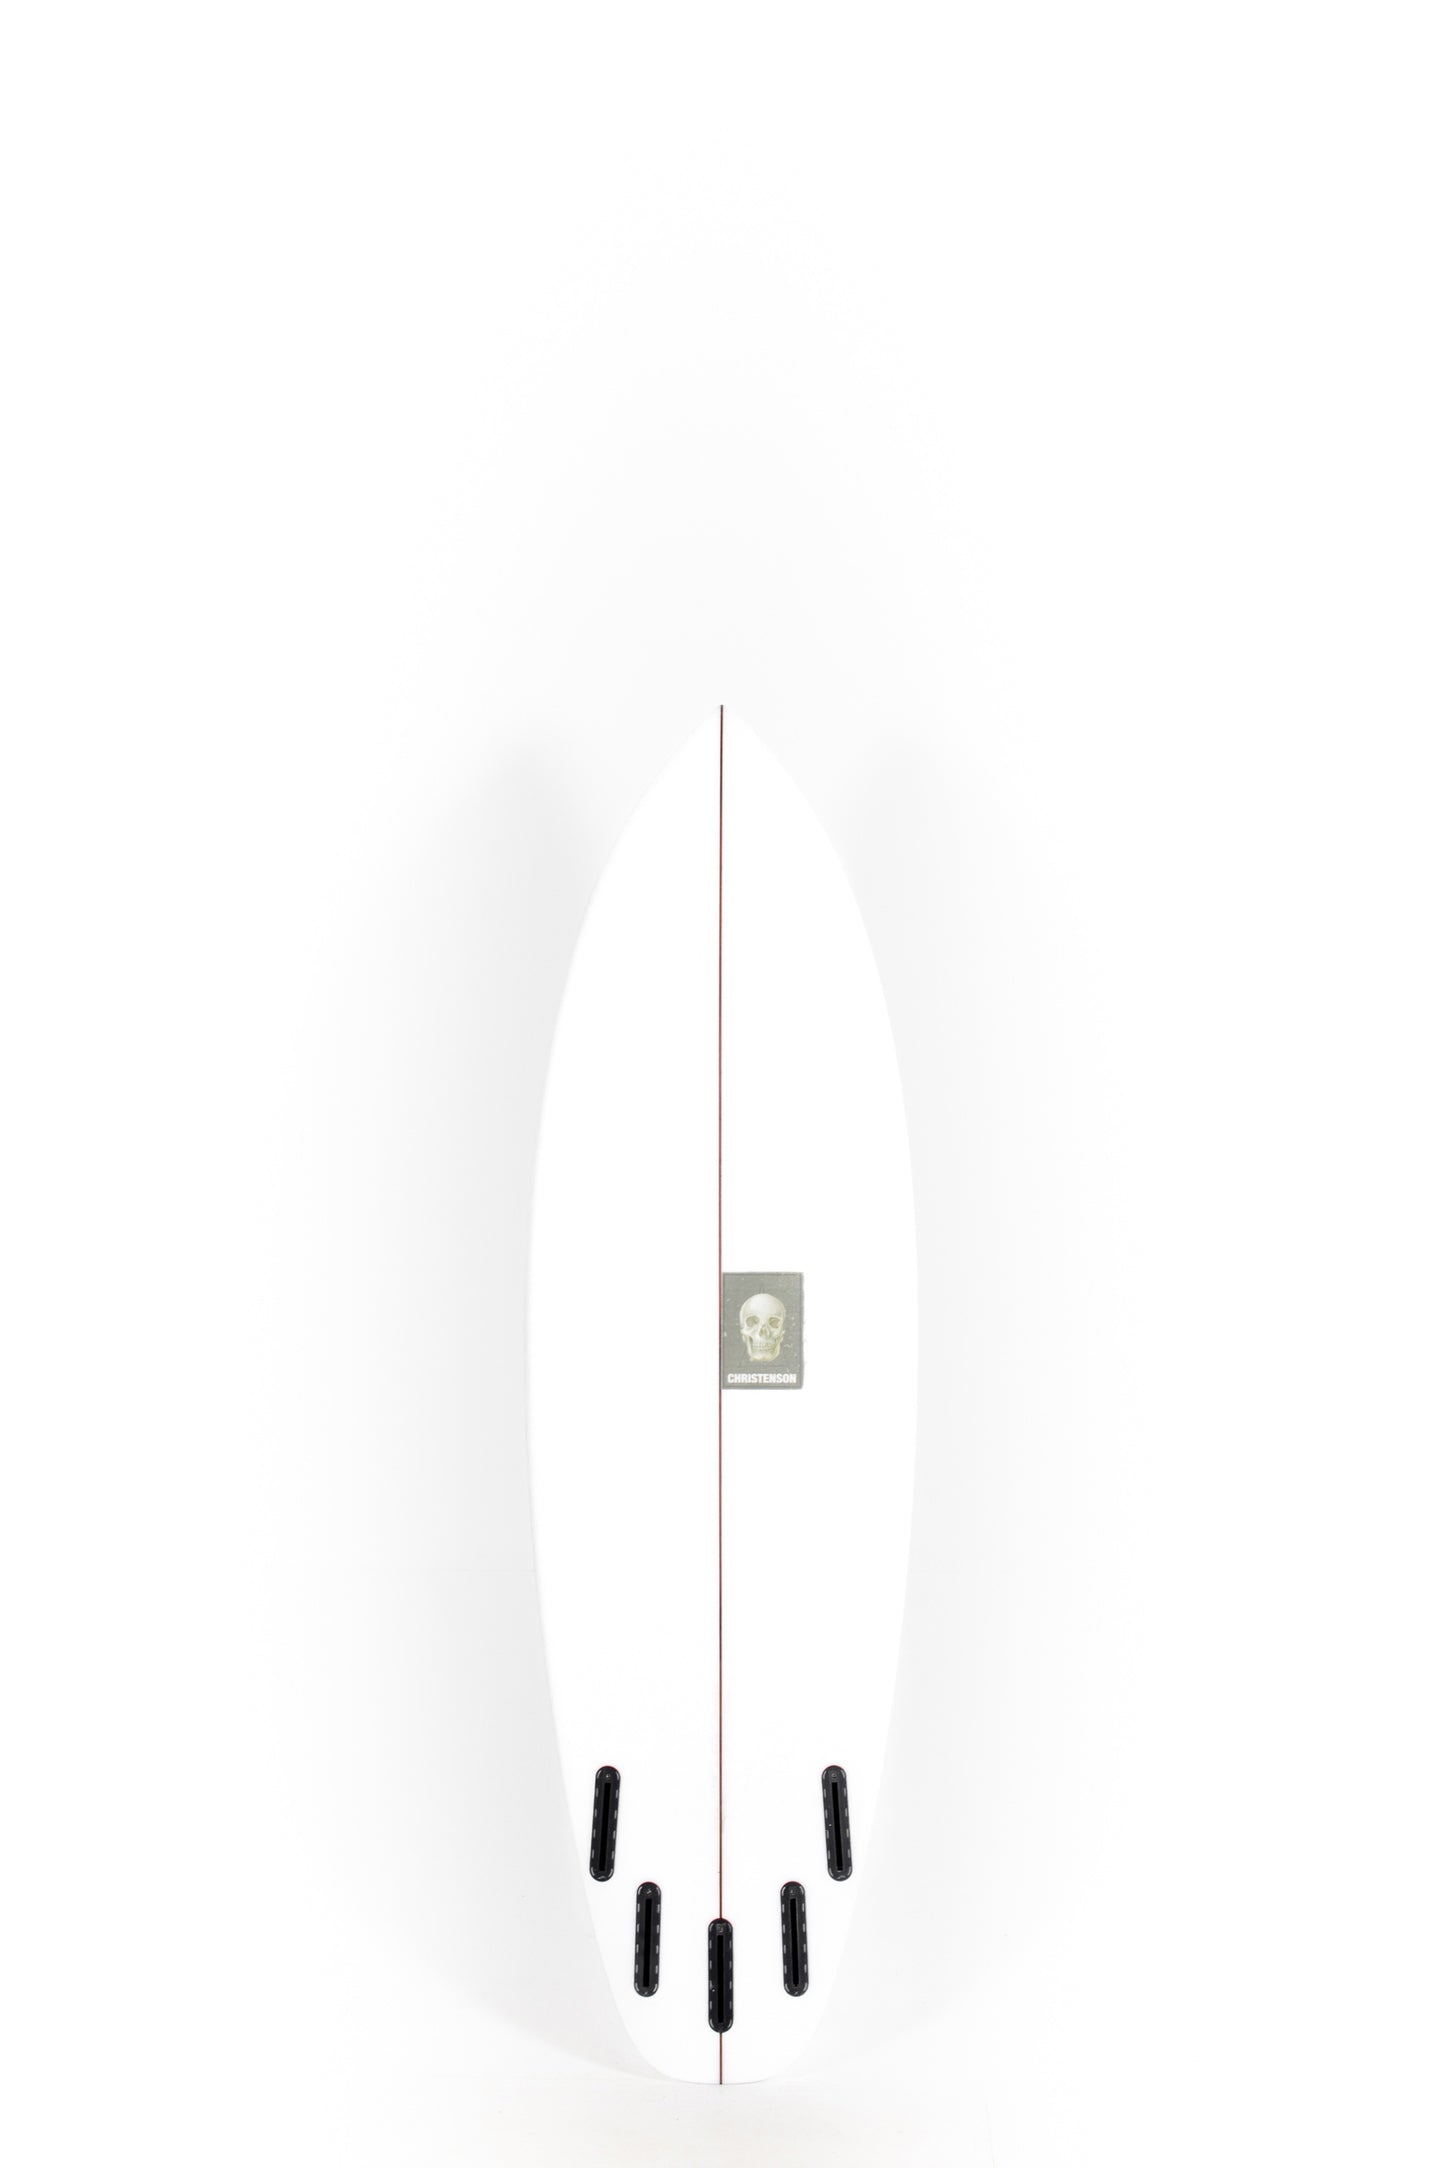 Pukas Surf Shop - Christenson Surfboard  - SURFER ROSA - 5'10” x 19 3/4 x 2 7/16 - CX04685Pukas Surf Shop - Christenson Surfboard  - SURFER ROSA - 5'10” x 19 3/4 x 2 7/16 - CX04685Pukas Surf Shop - Pukas Surf Shop - Christenson Surfboard  - SURFER ROSA - 5'10” x 19 3/4 x 2 7/16 - CX04685